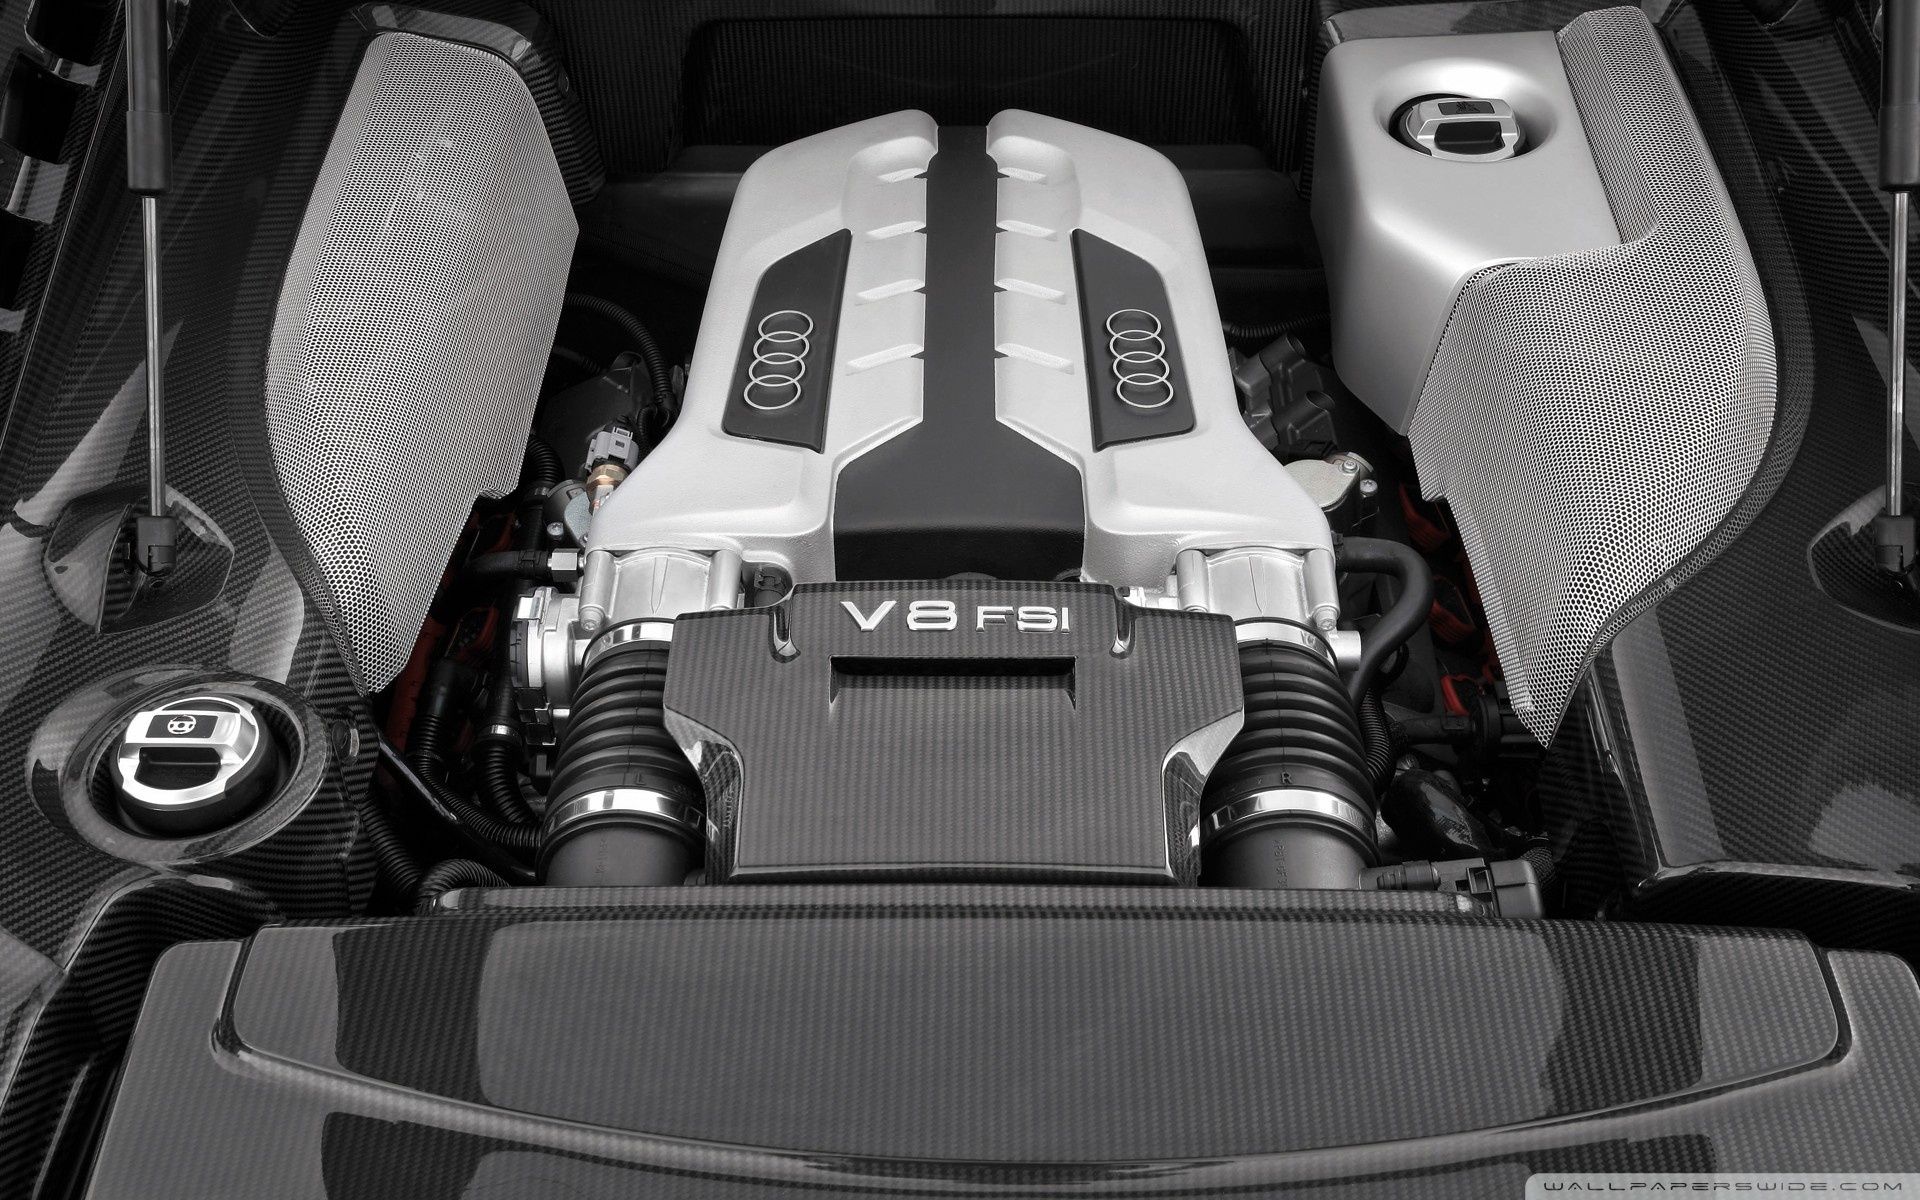 Audi V8 FSI Engine Ultra HD Desktop Background Wallpaper for 4K